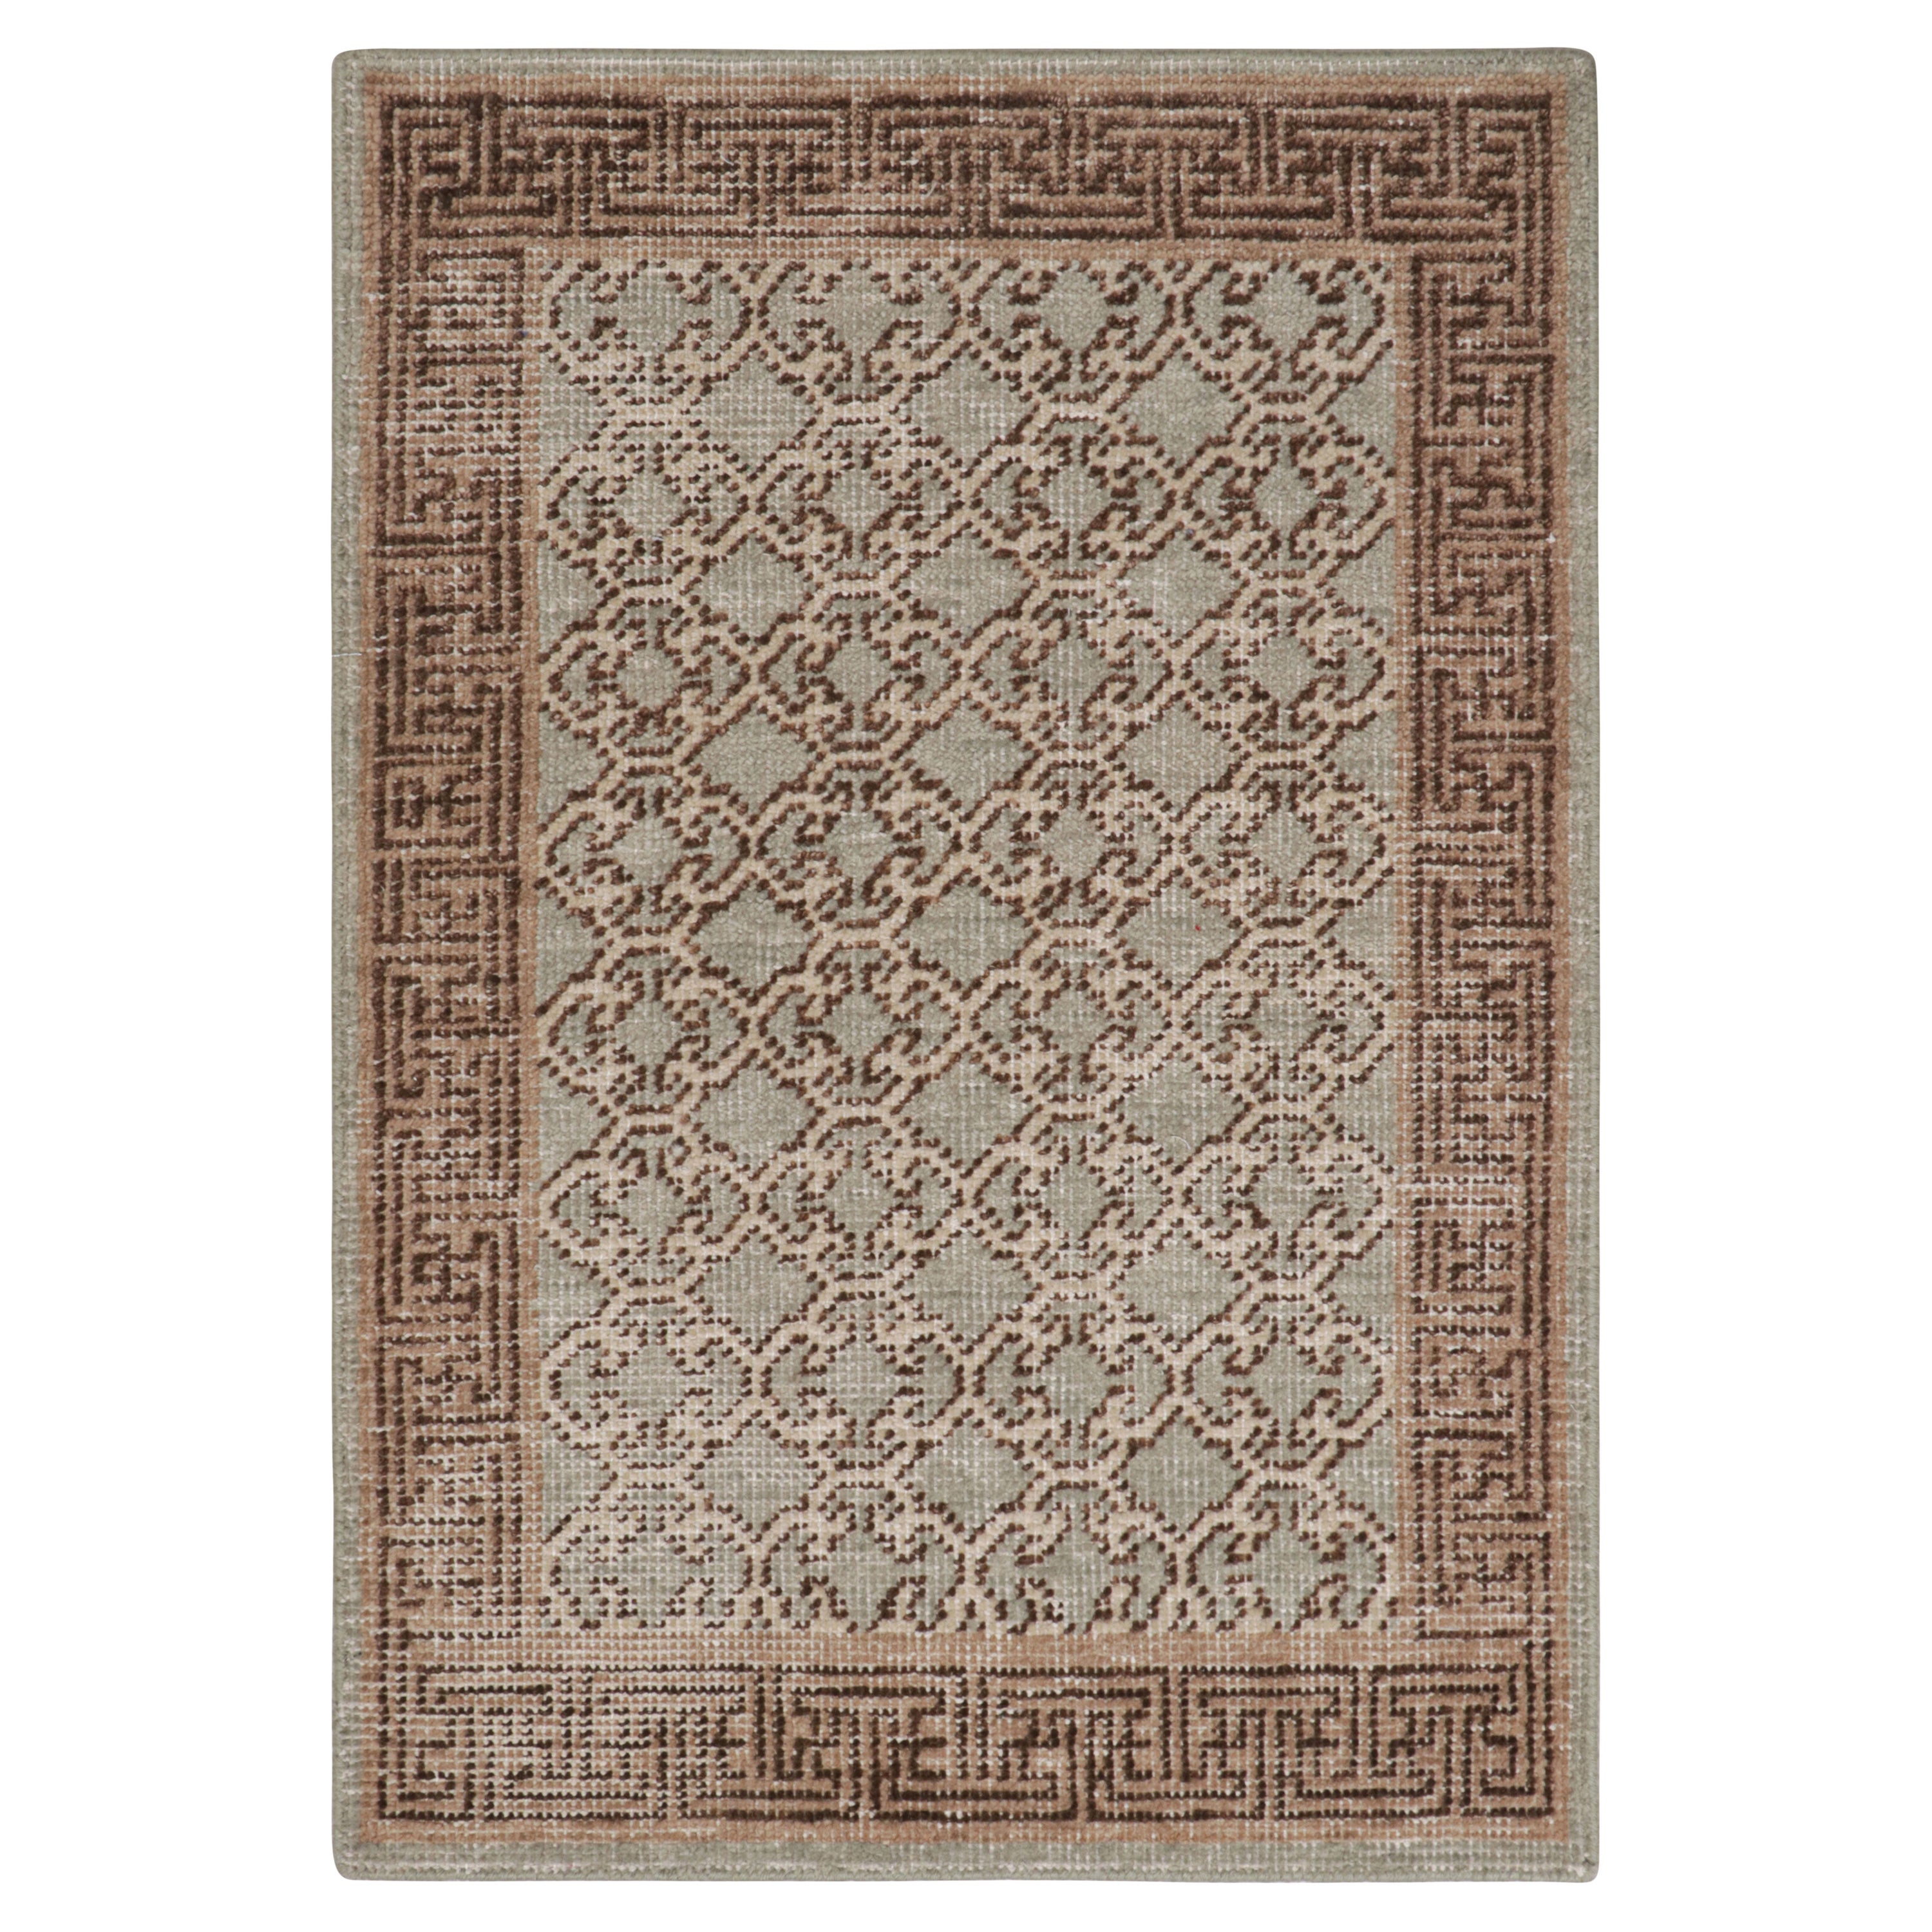 Rug & Kilim’s Khotan Samarkand Style Scatter Rug With Geometric Patterns